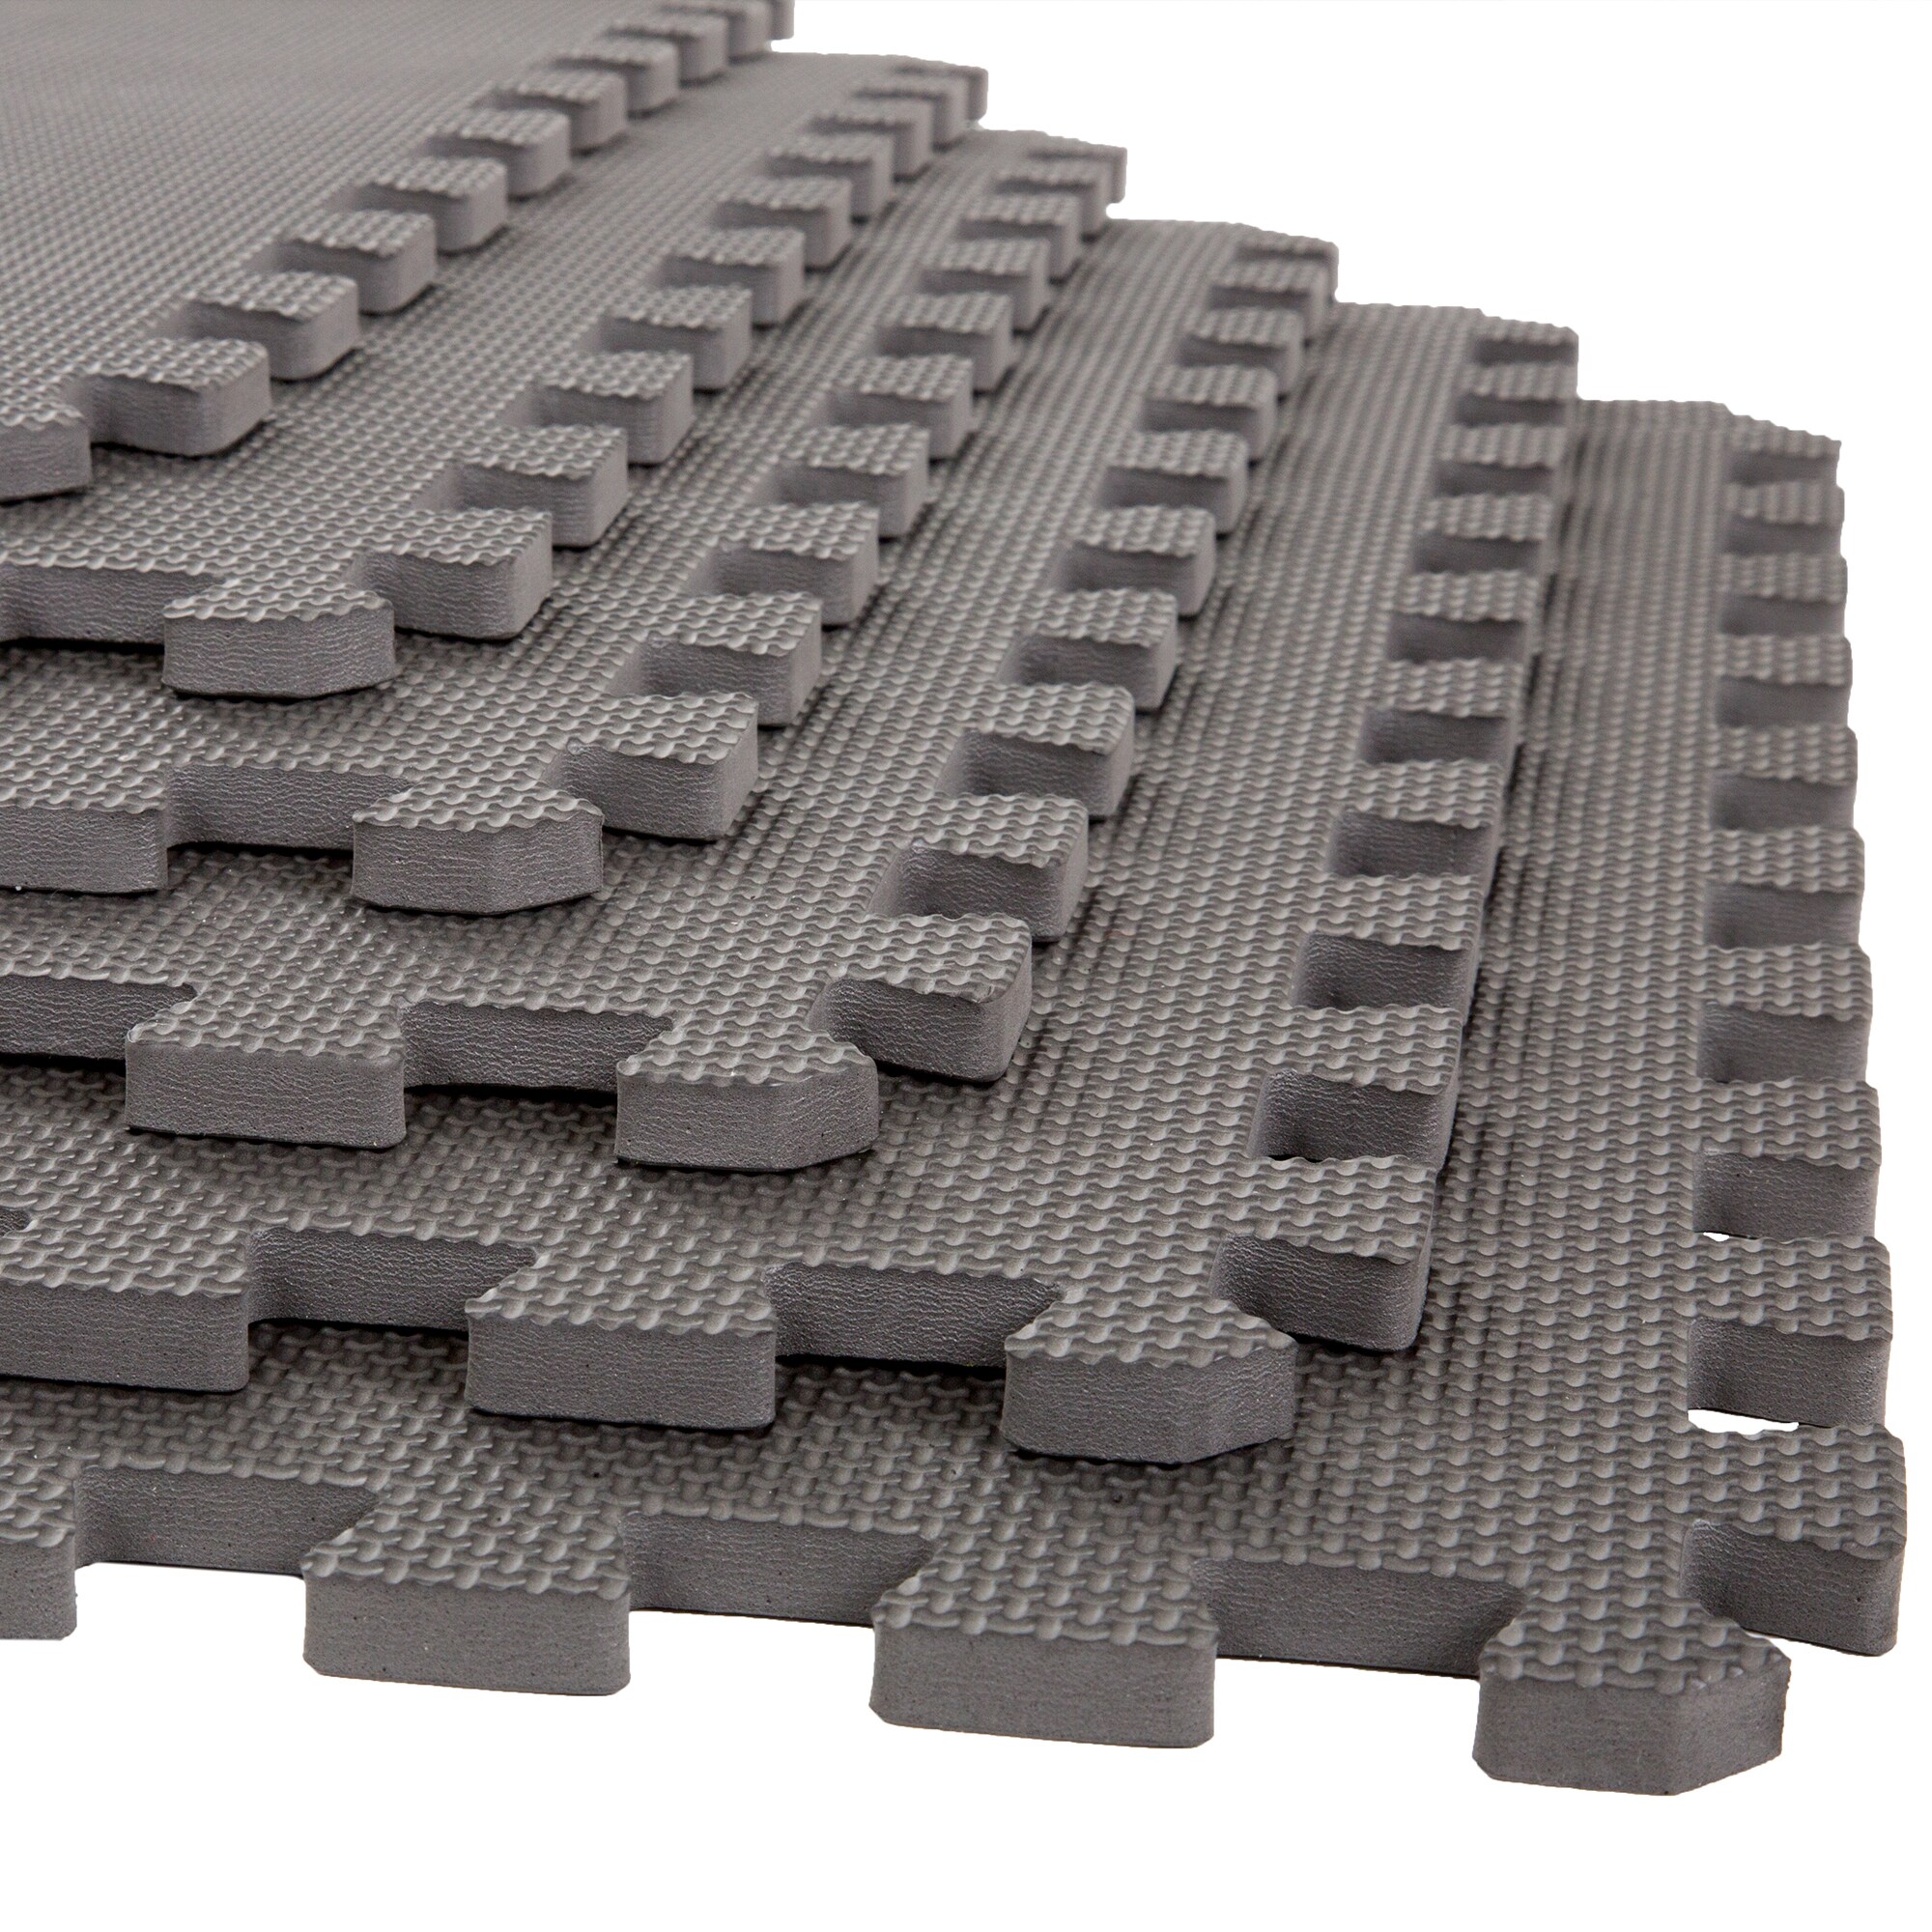 24 in. x 24 in. x 0.47 in. White Wood Grain EVA Interlocking Foam Floor Mat  for Exercise, Protect Flooring (4-Pack)